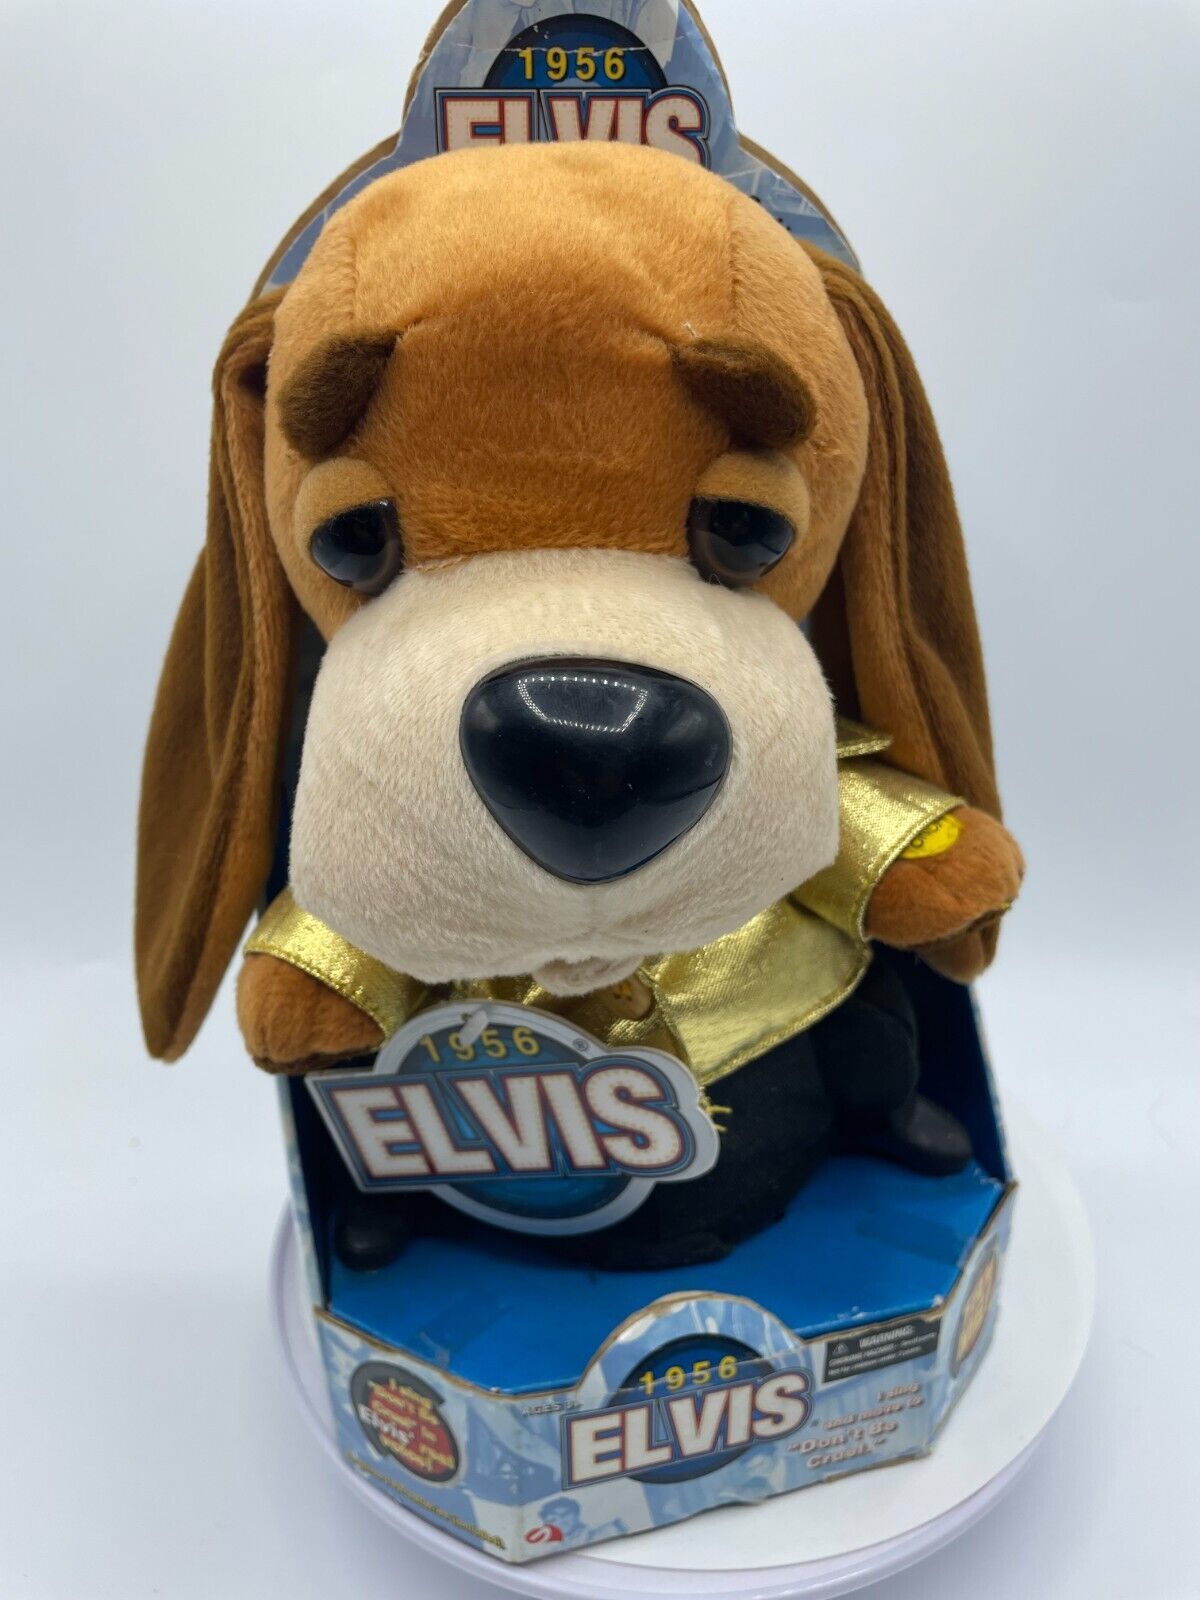 Elvis 1956 Hound Dog Collection Singing Plush Toy Don't be cruel 2003 Vintage  - $18.99